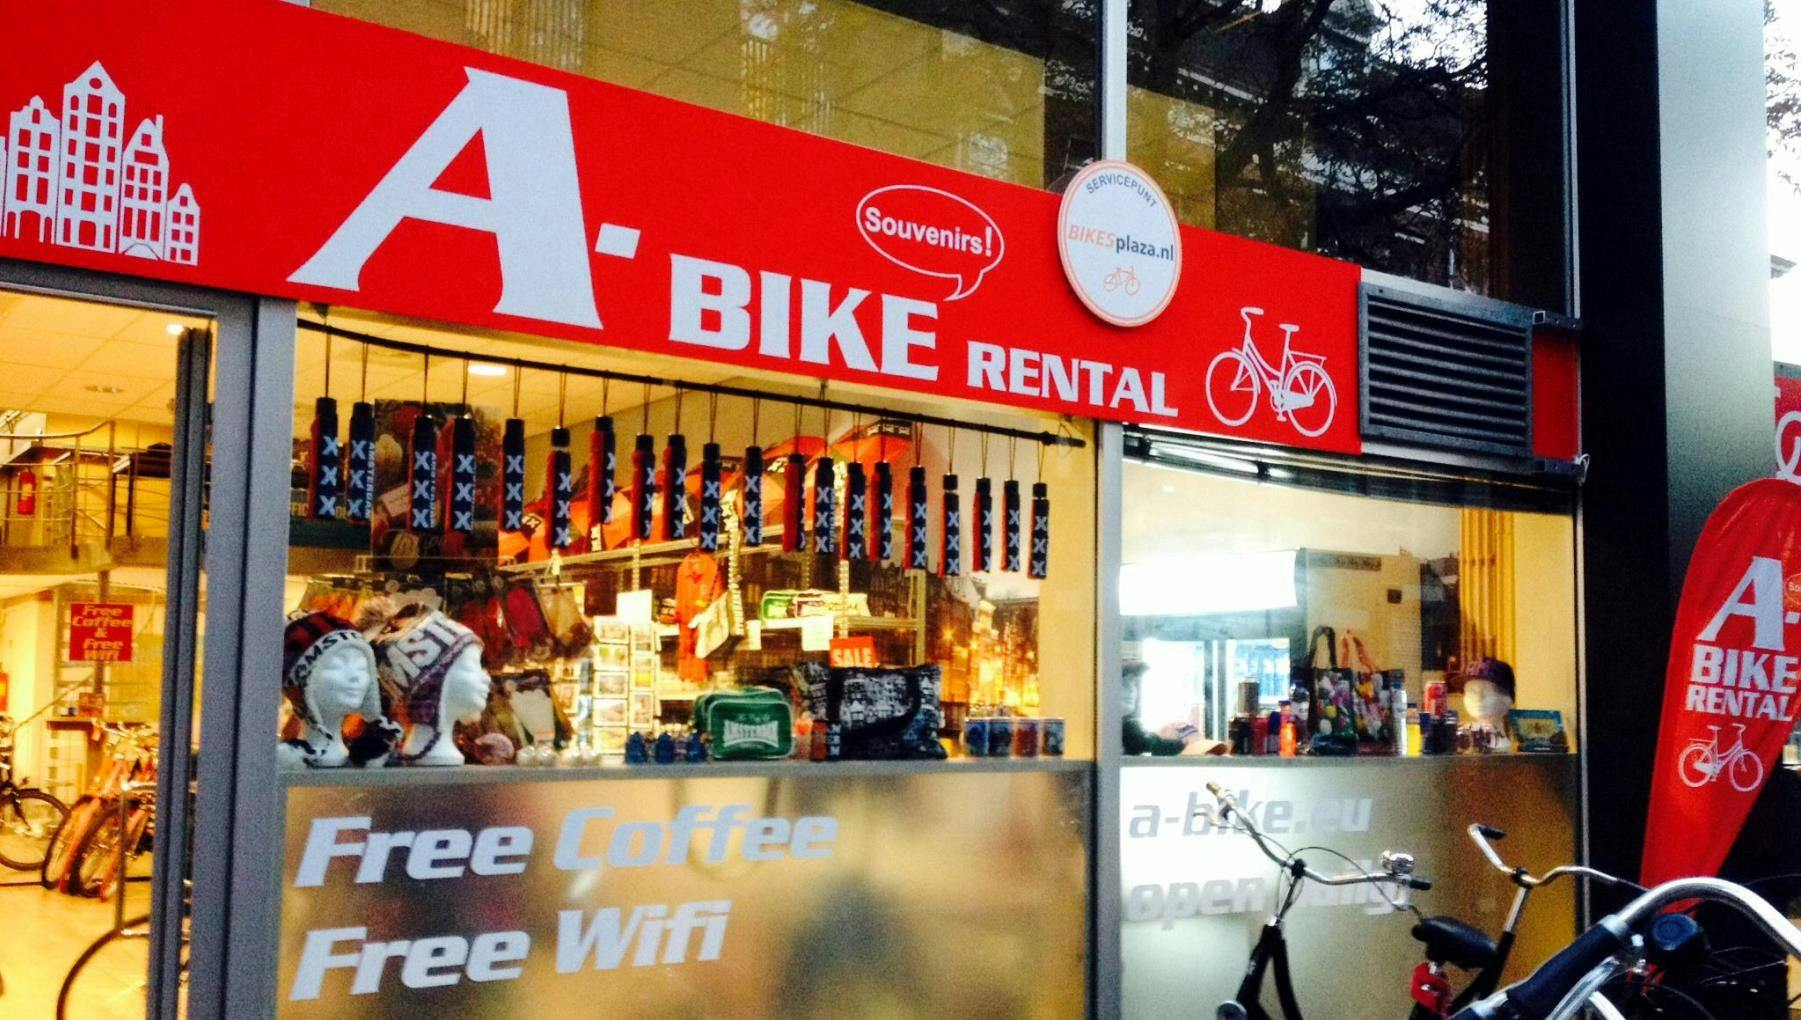 A-Bike Rental Kerkstraat